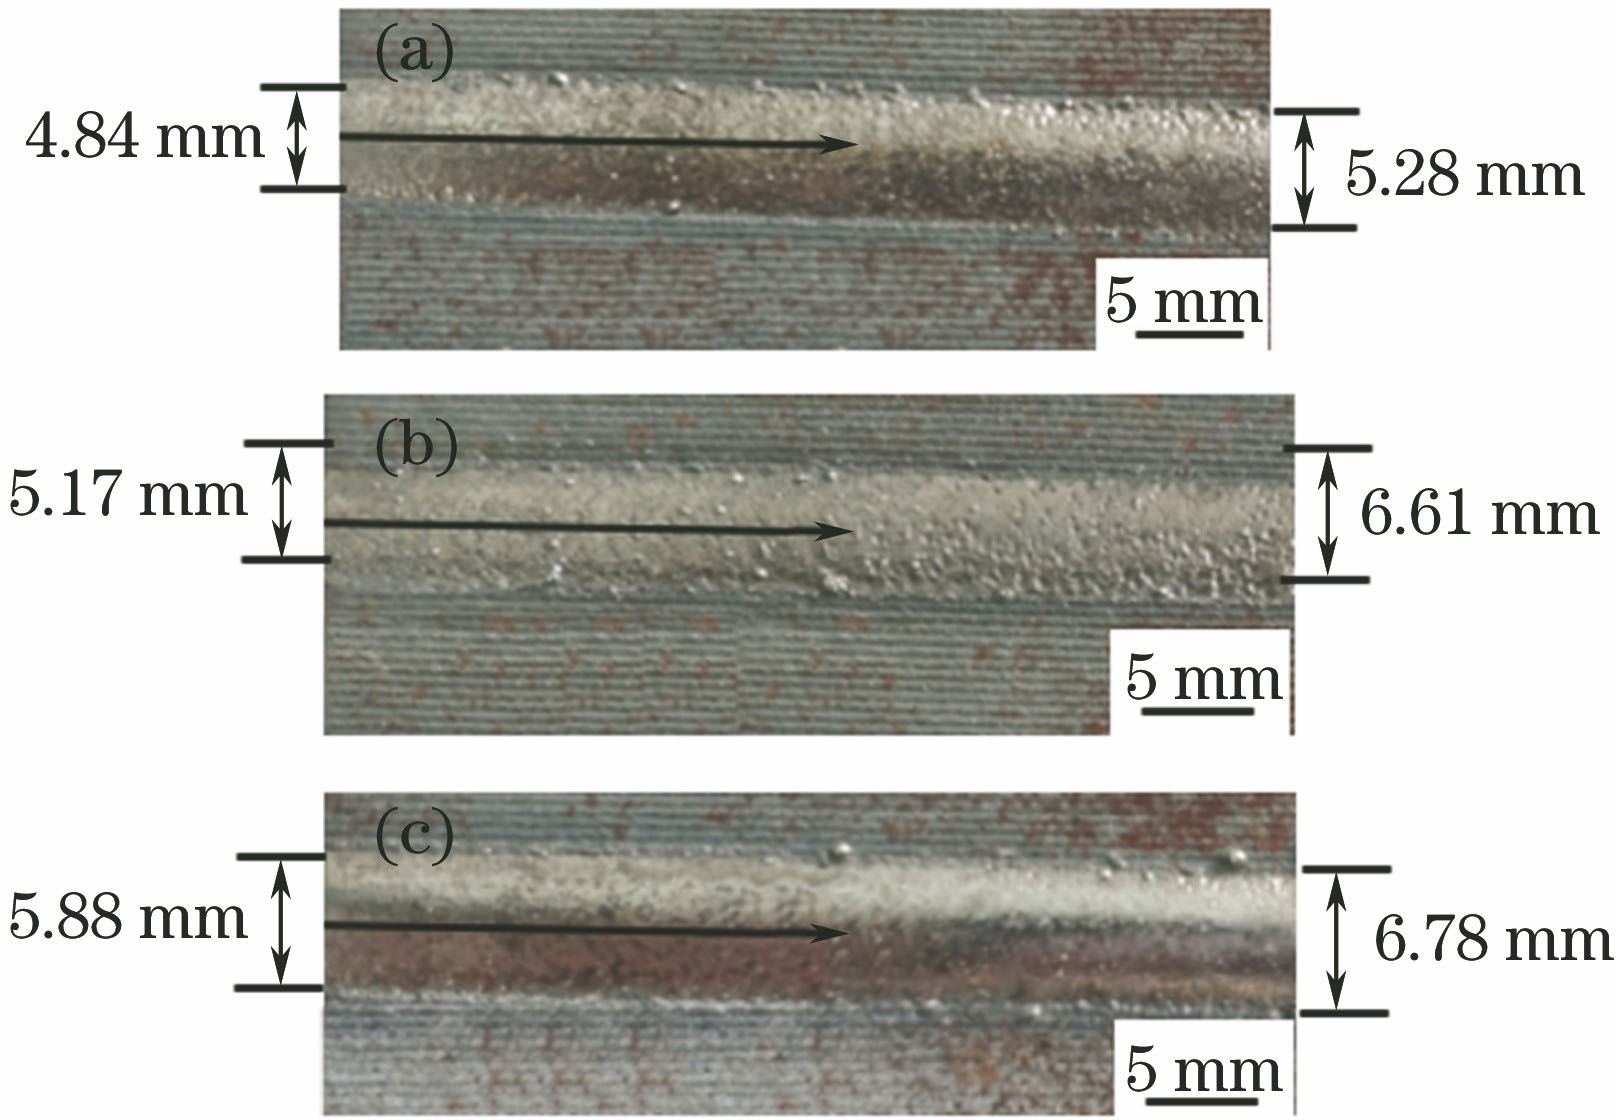 Upper surface macro-morphologies of laser cladded Co-based alloy under different defocus amounts. (a) D=110 mm; (b) D=130 mm; (c) D=150 mm